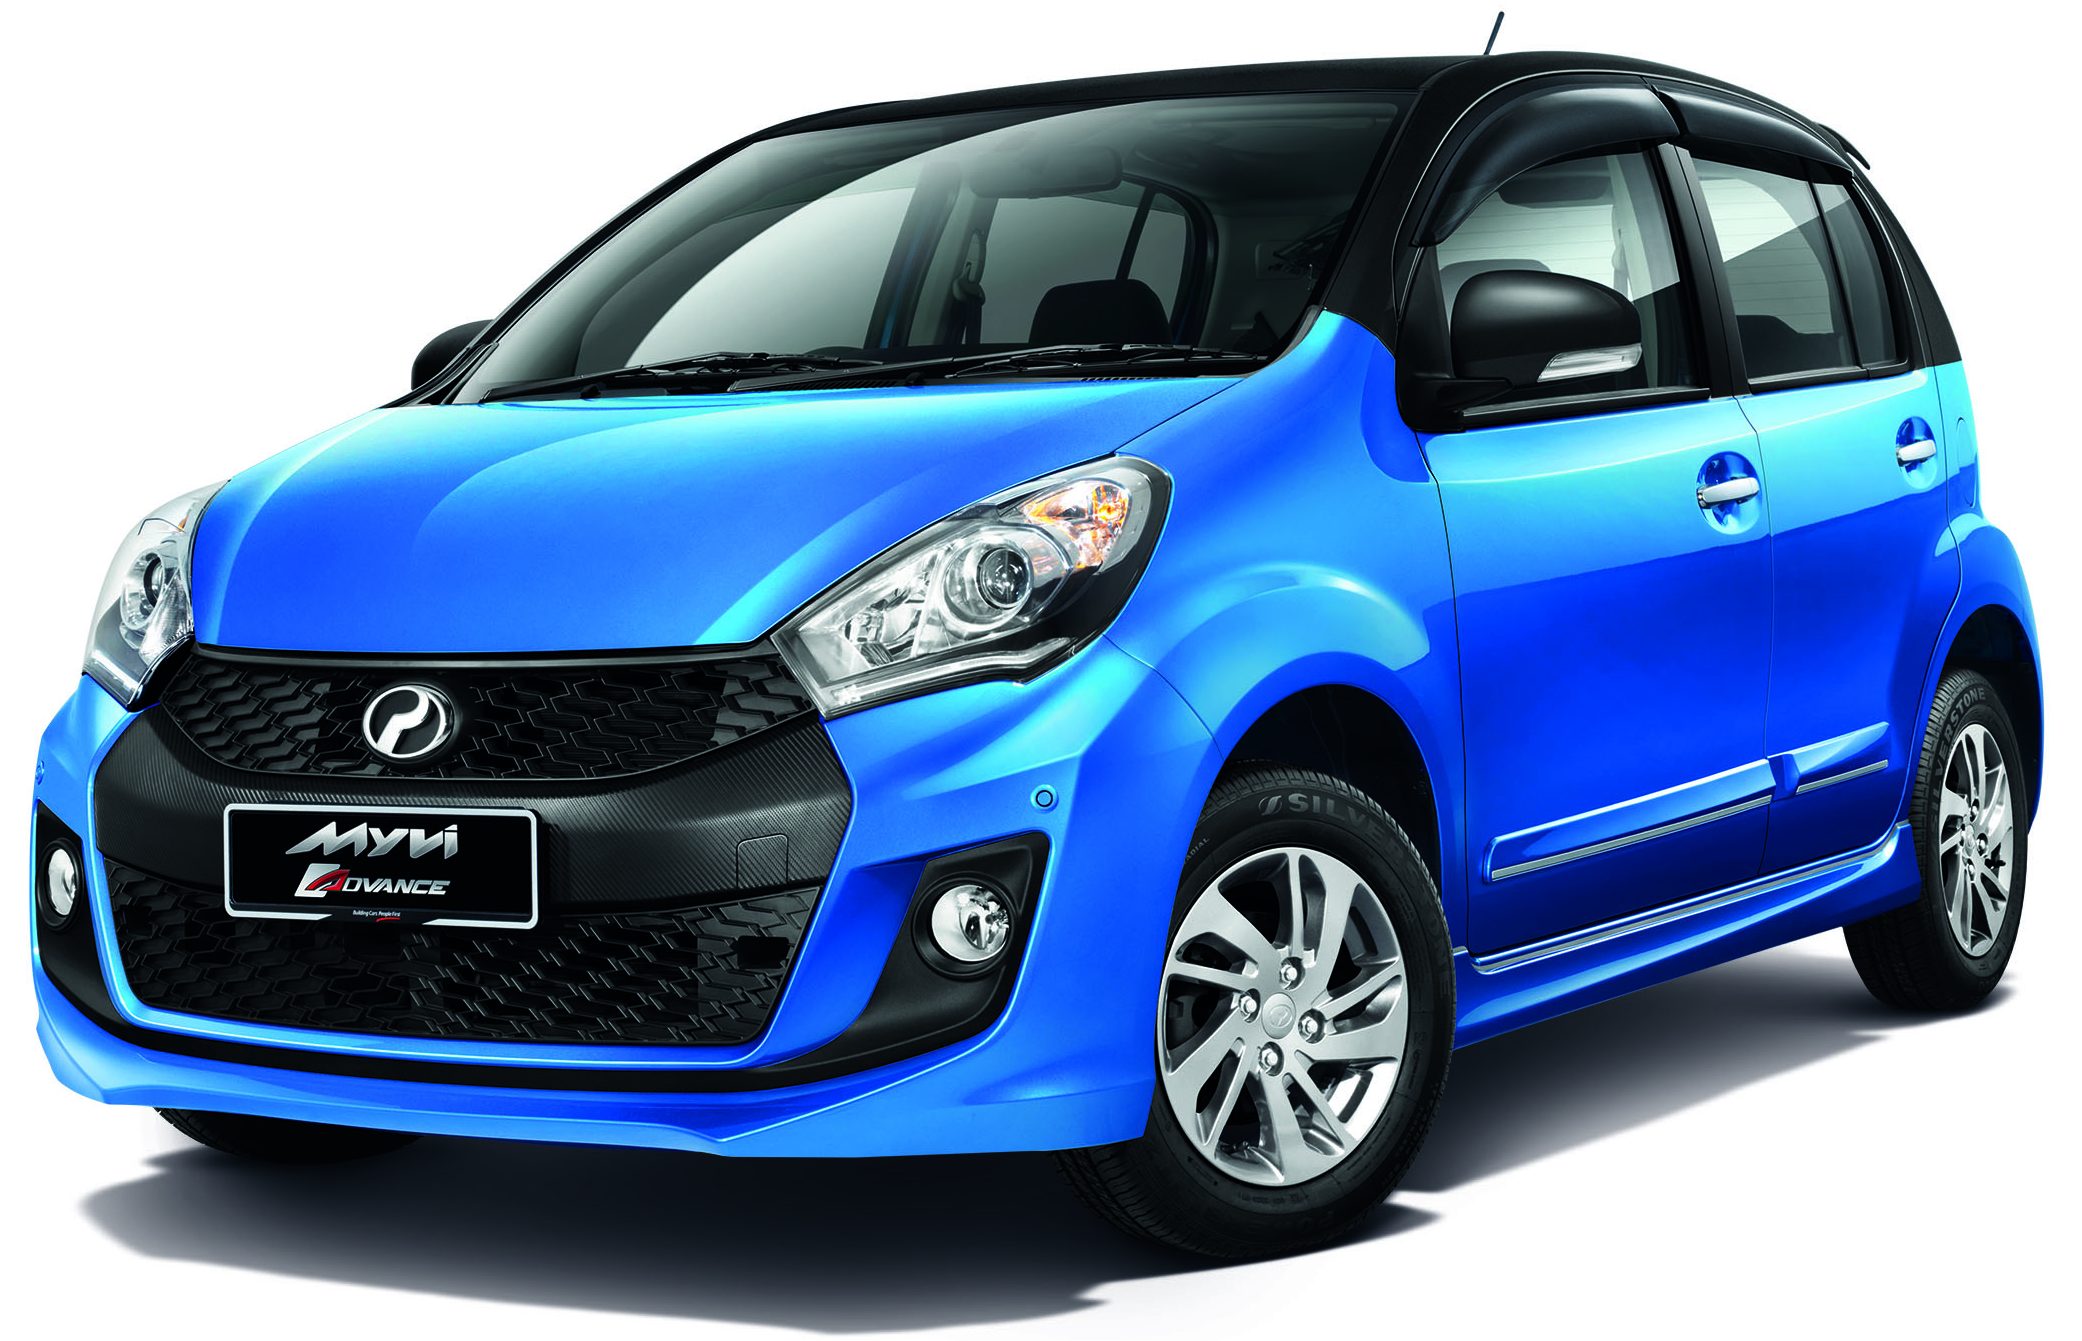 Perodua Myvi Advance gets new two-tone colour scheme; SE 